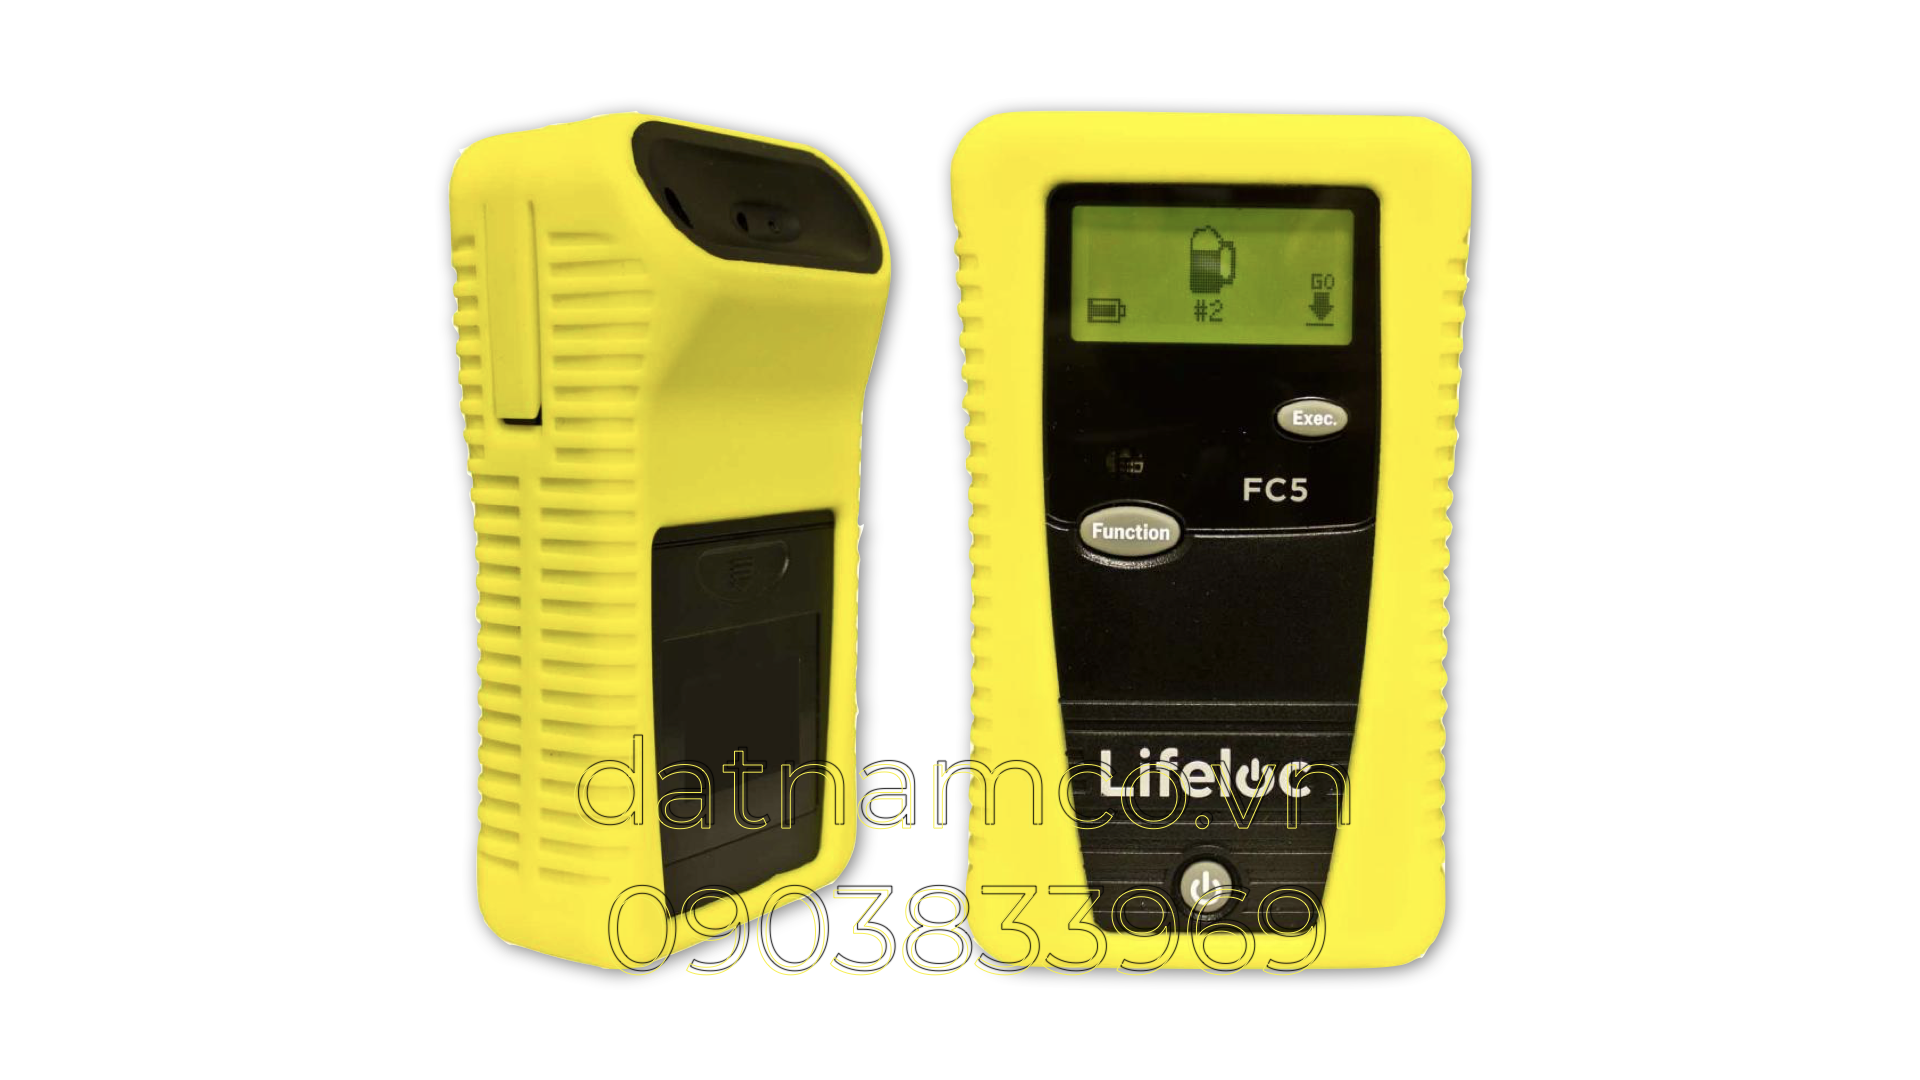 Máy đo nồng độ cồn LIFELOC FC5